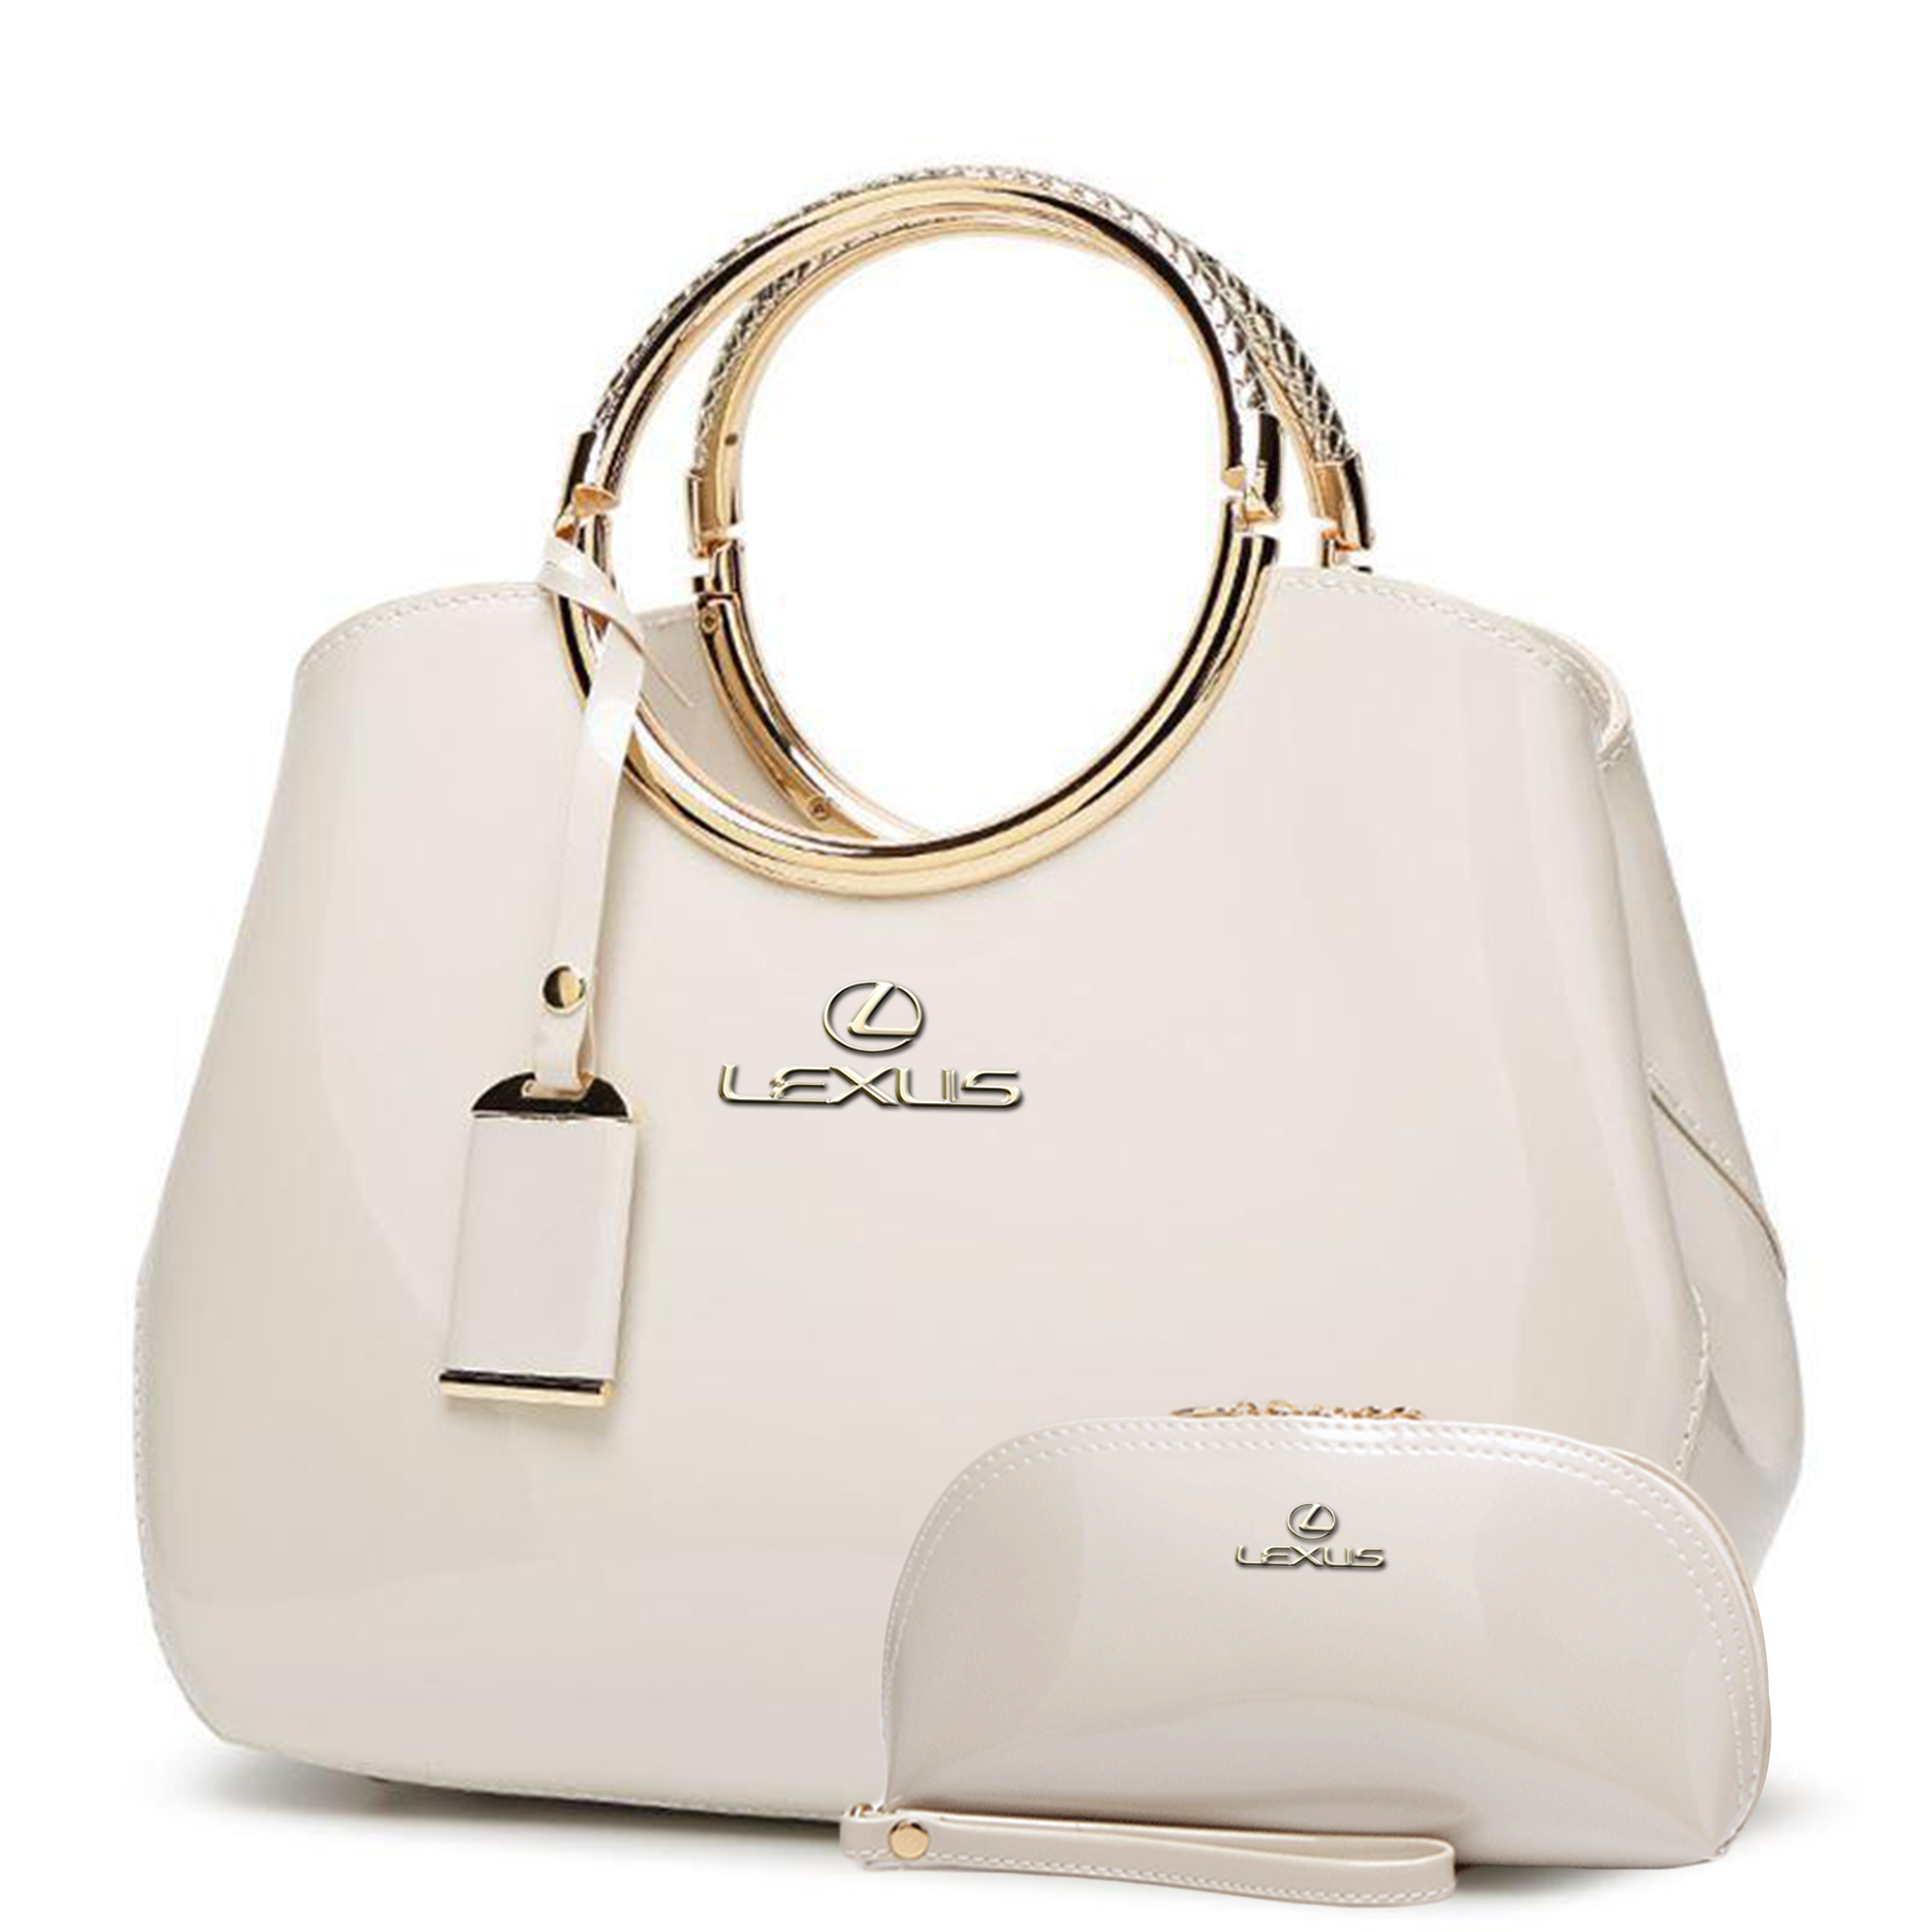 Lexus Fashionable Deluxe Women Handbag - Tana Elegant